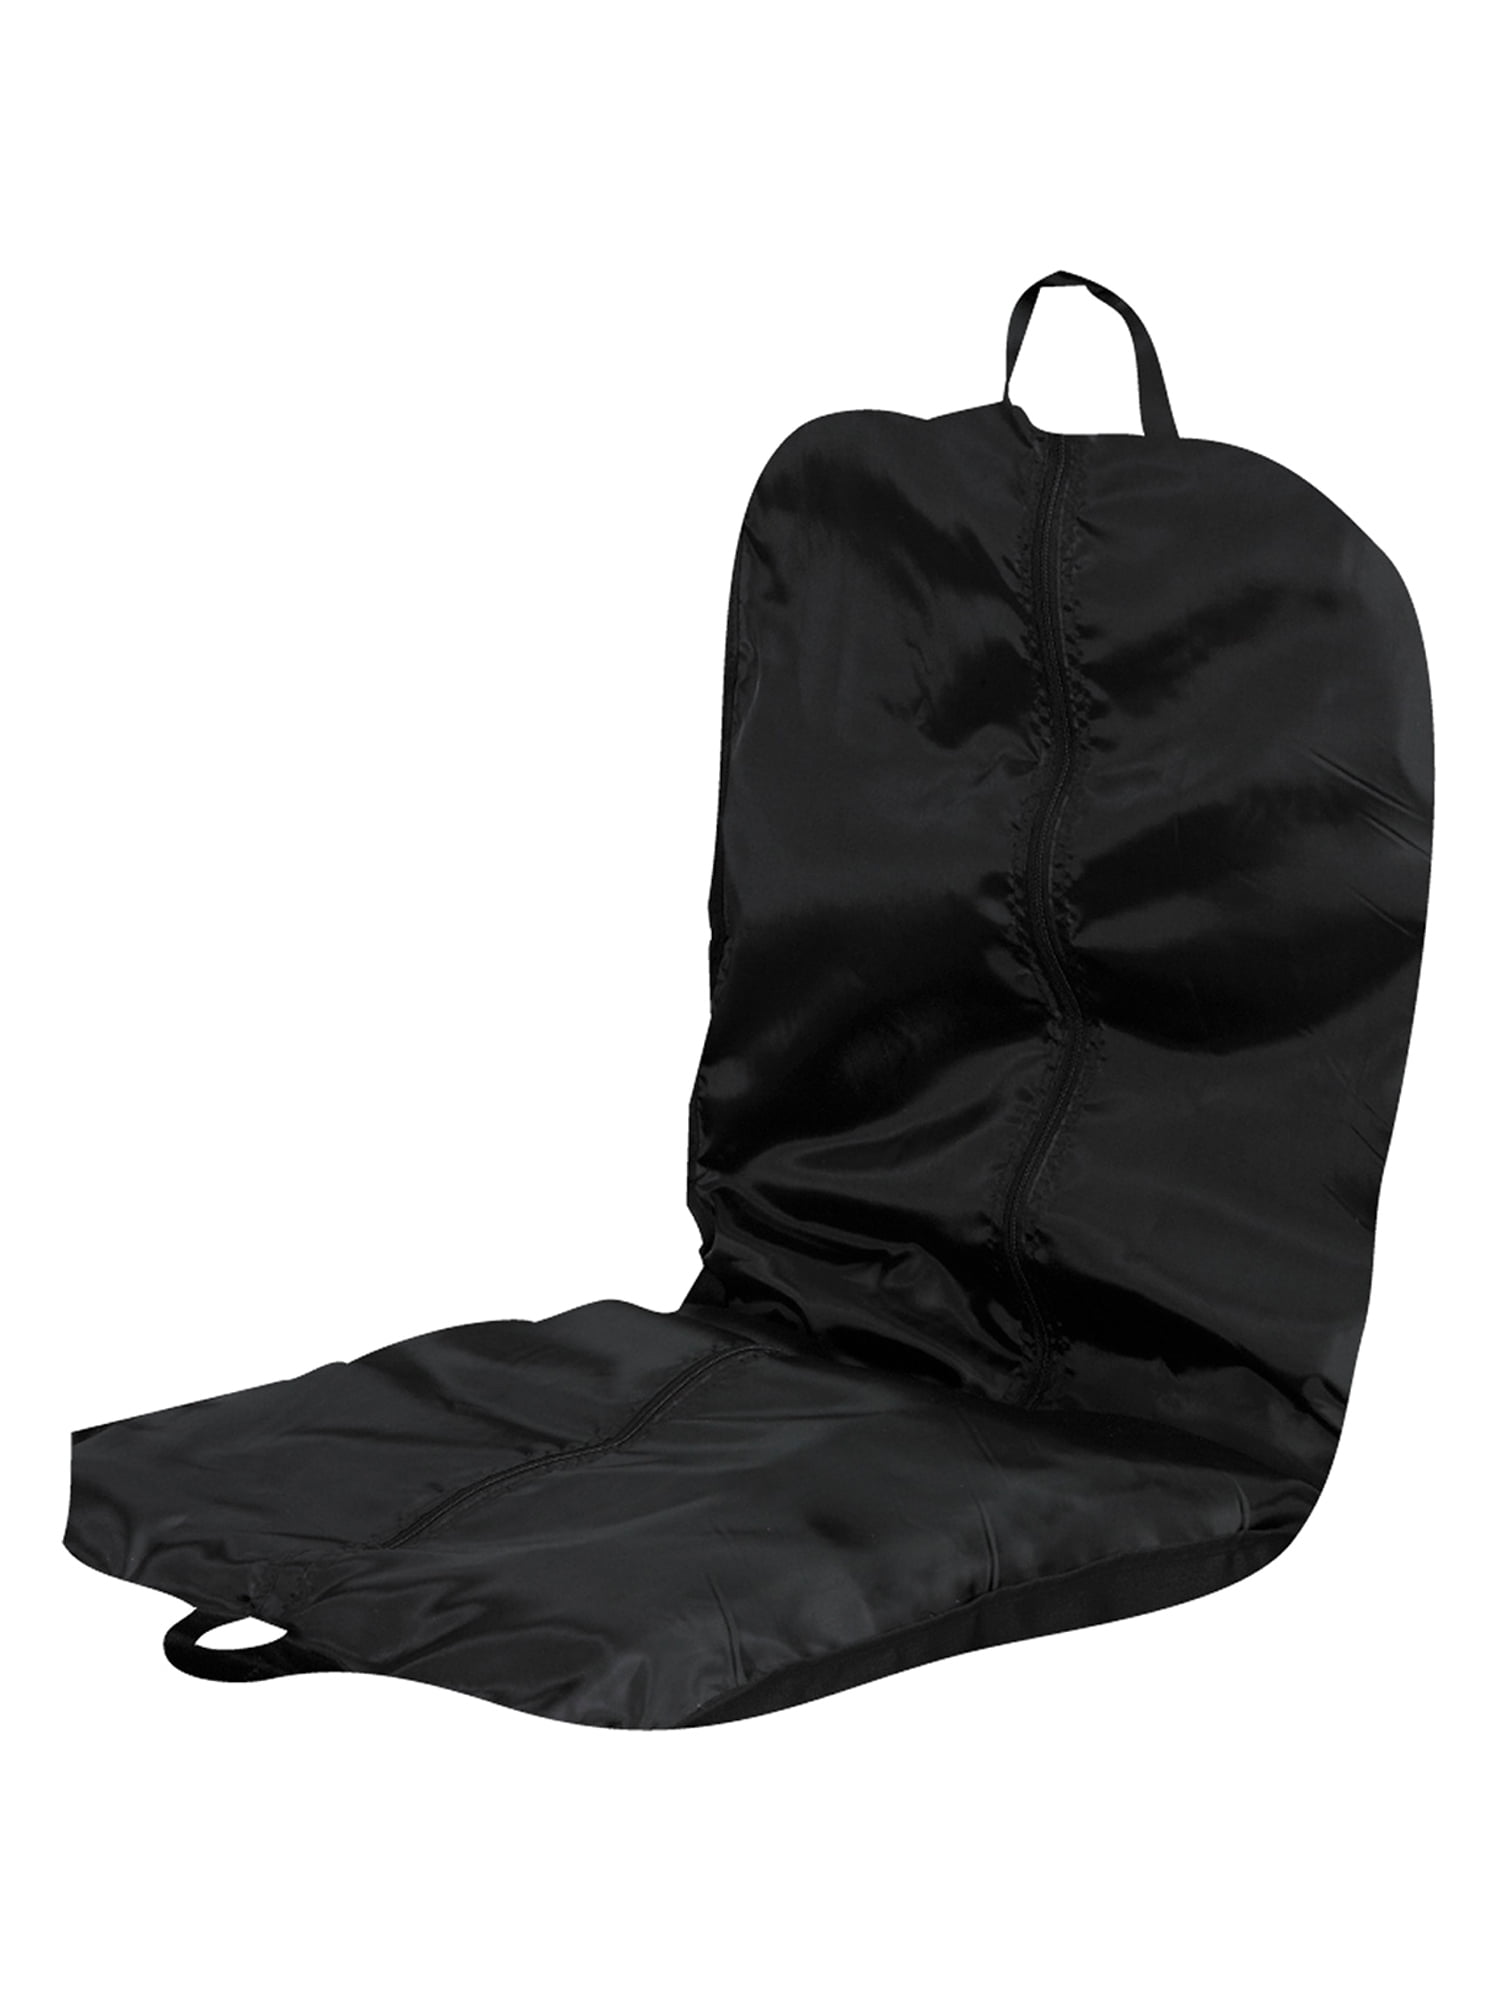 MEIZI Suit Carrier Suit Bag Oxford Fabric Garment Bag Suit Cover Bag for Men for Travel Oxford Fabric 1 Pack Foldable Mens Suit Holder 